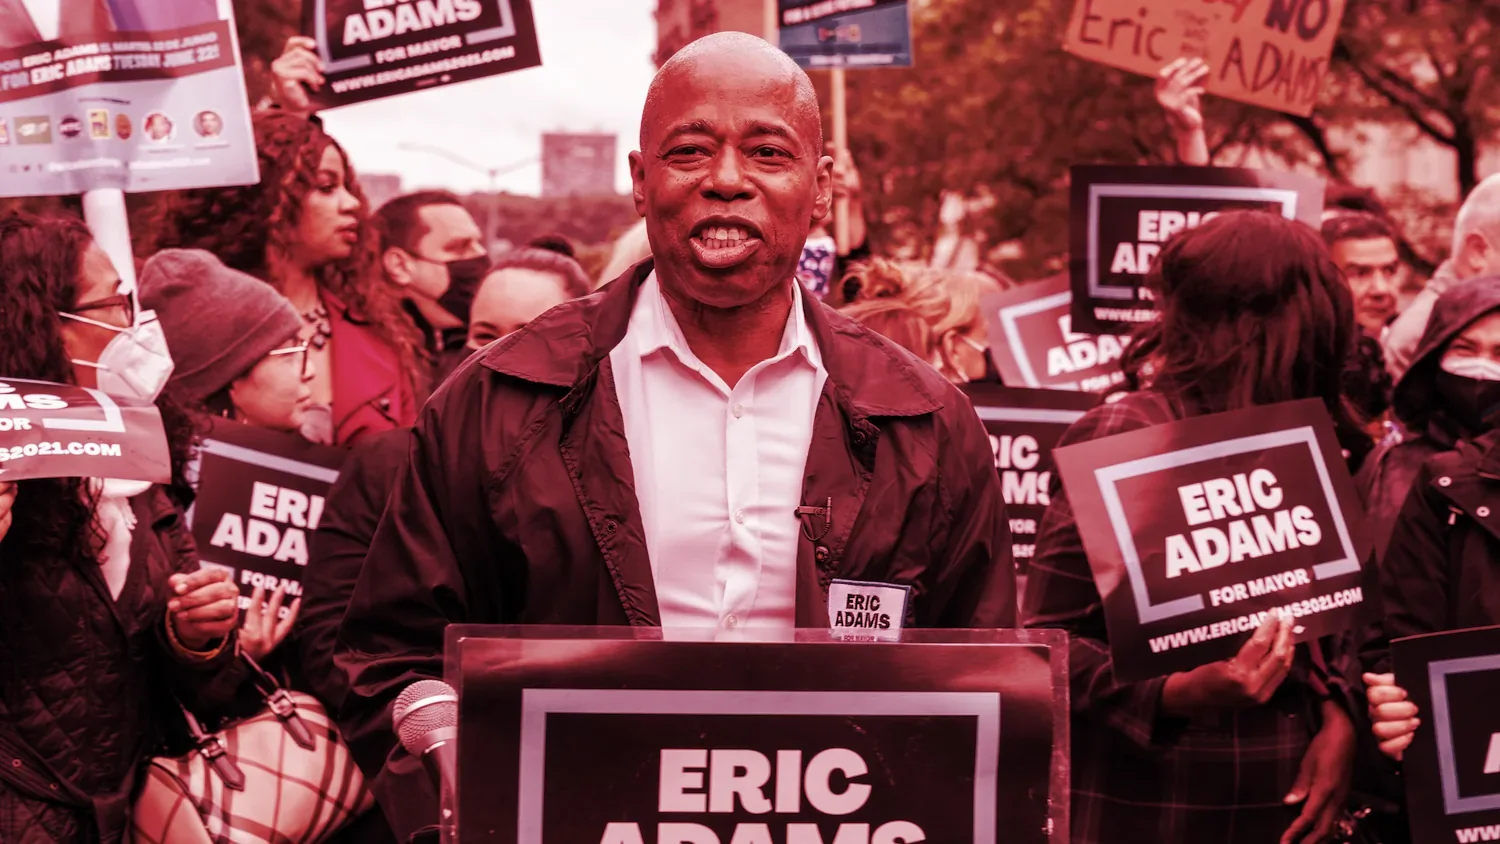 The next mayor of New York, Eric Adams. Image: Shutterstock